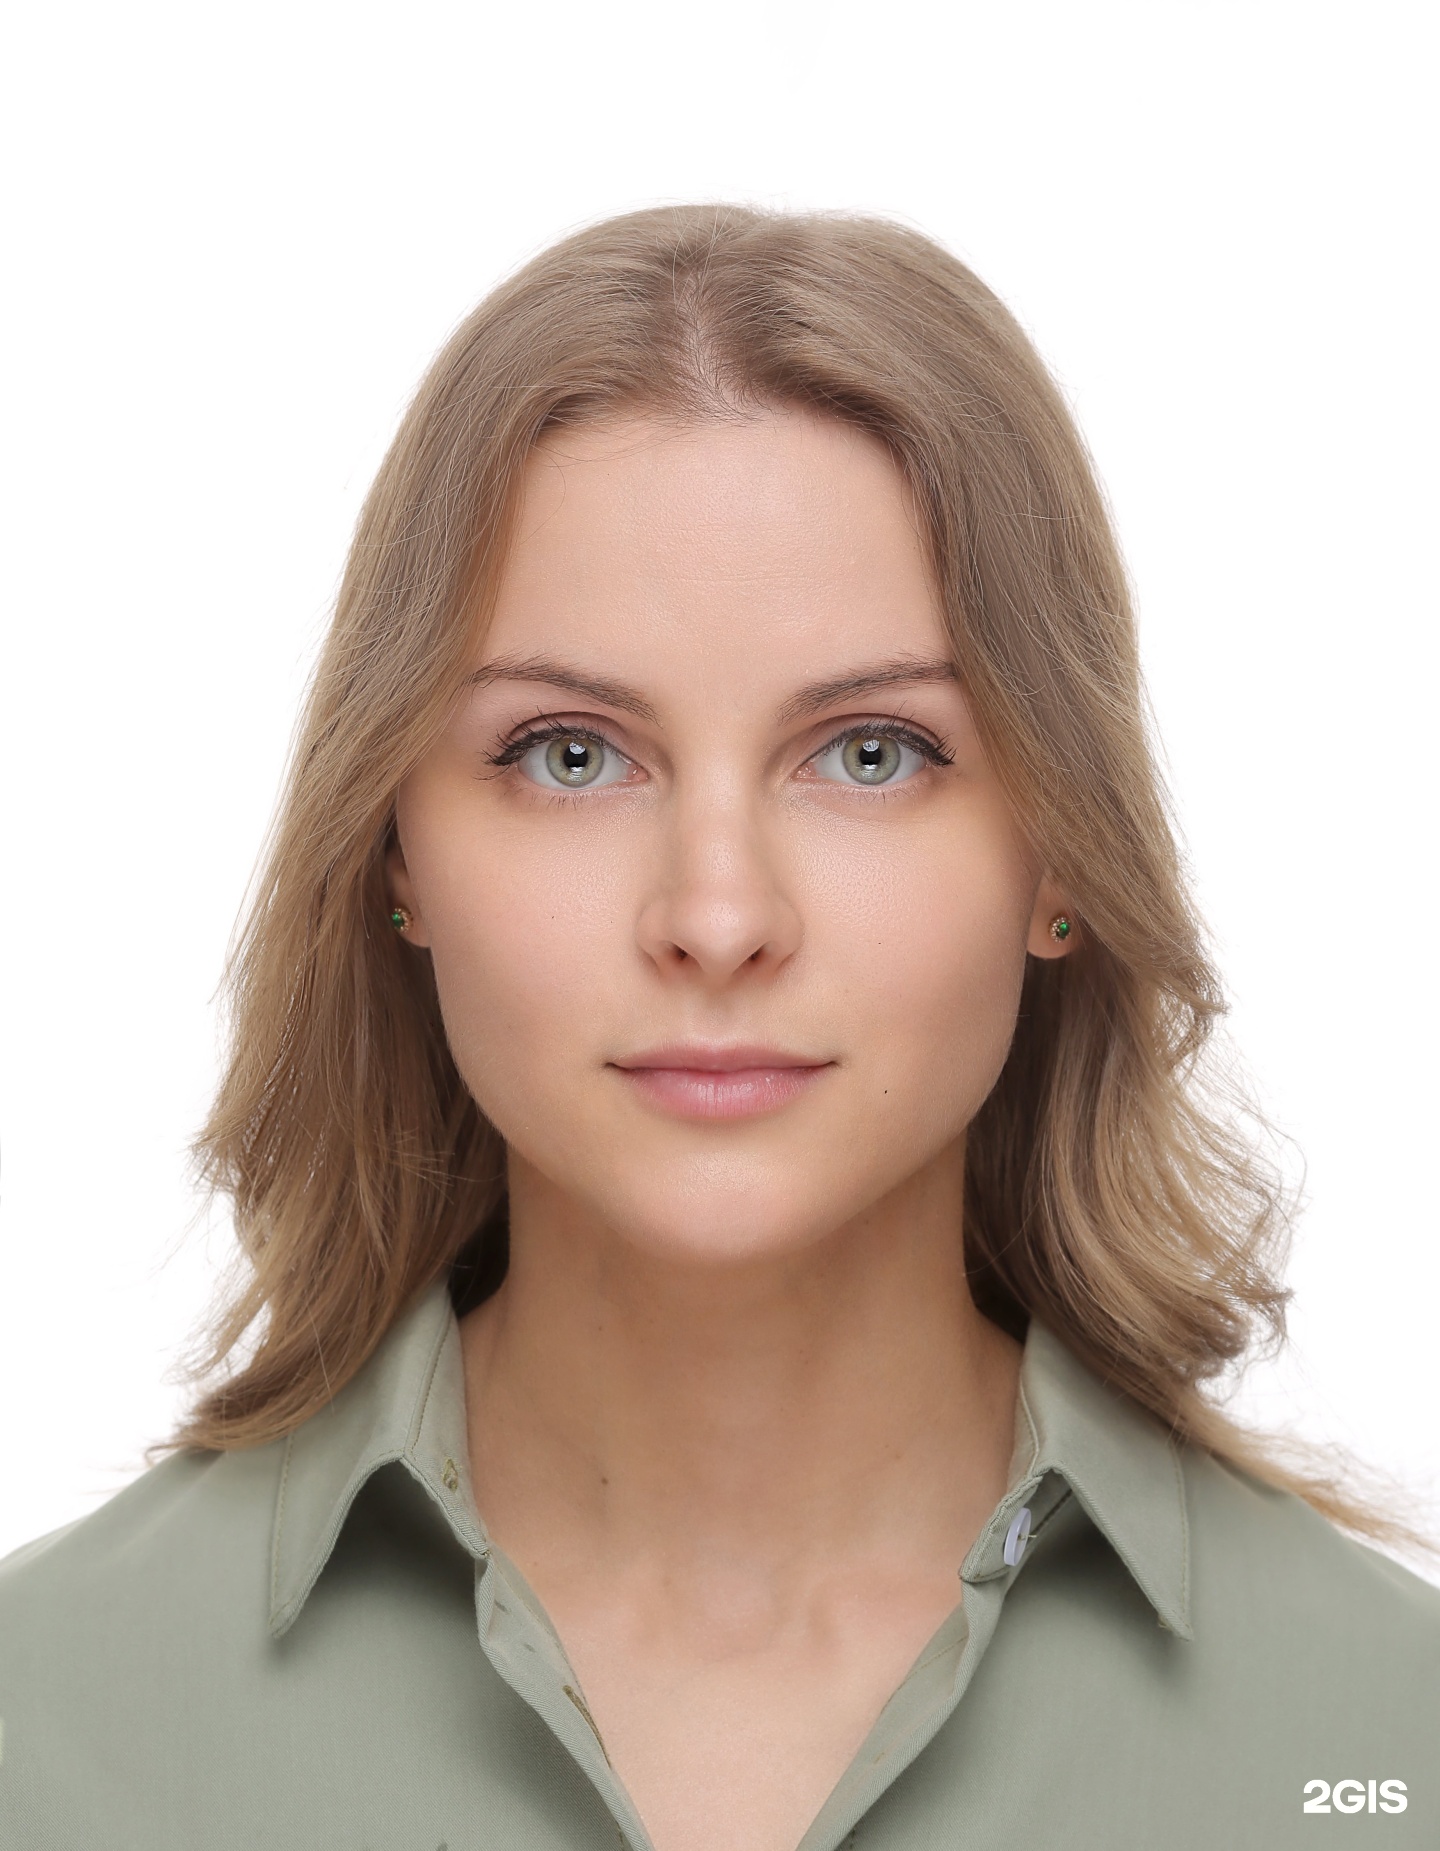 Фотография 3. Паспорт женщины. Паспорт с лицом. Фотография на паспорт. Паспорт с лицом девушки.